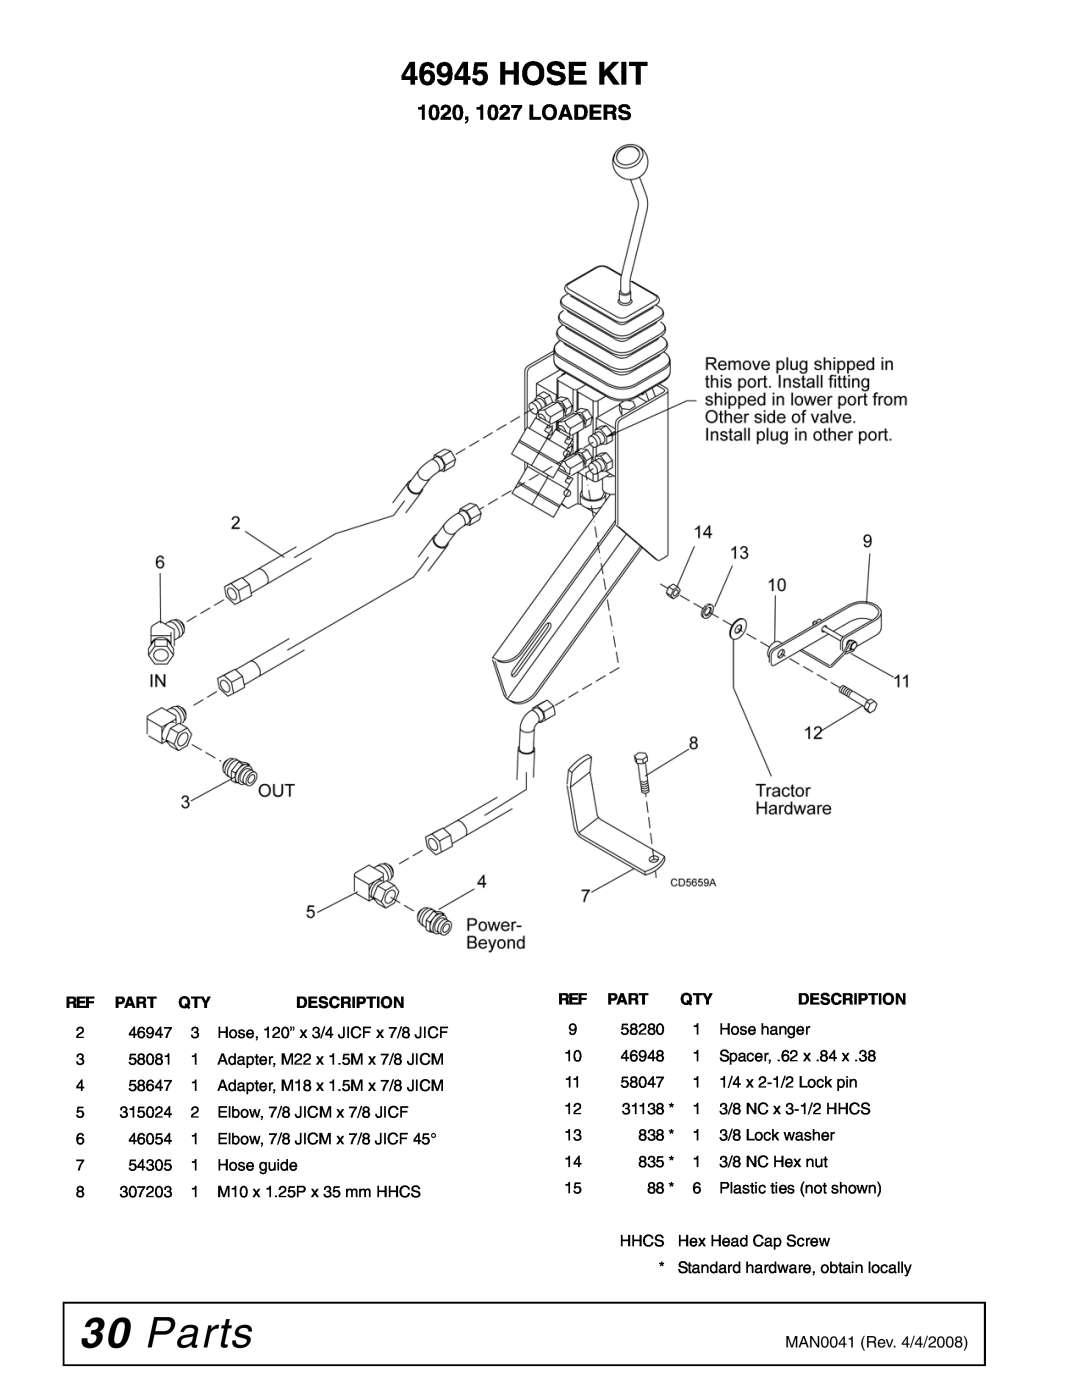 Woods Equipment LU126 installation manual Parts, Hose Kit, 1020, 1027 LOADERS, Description 